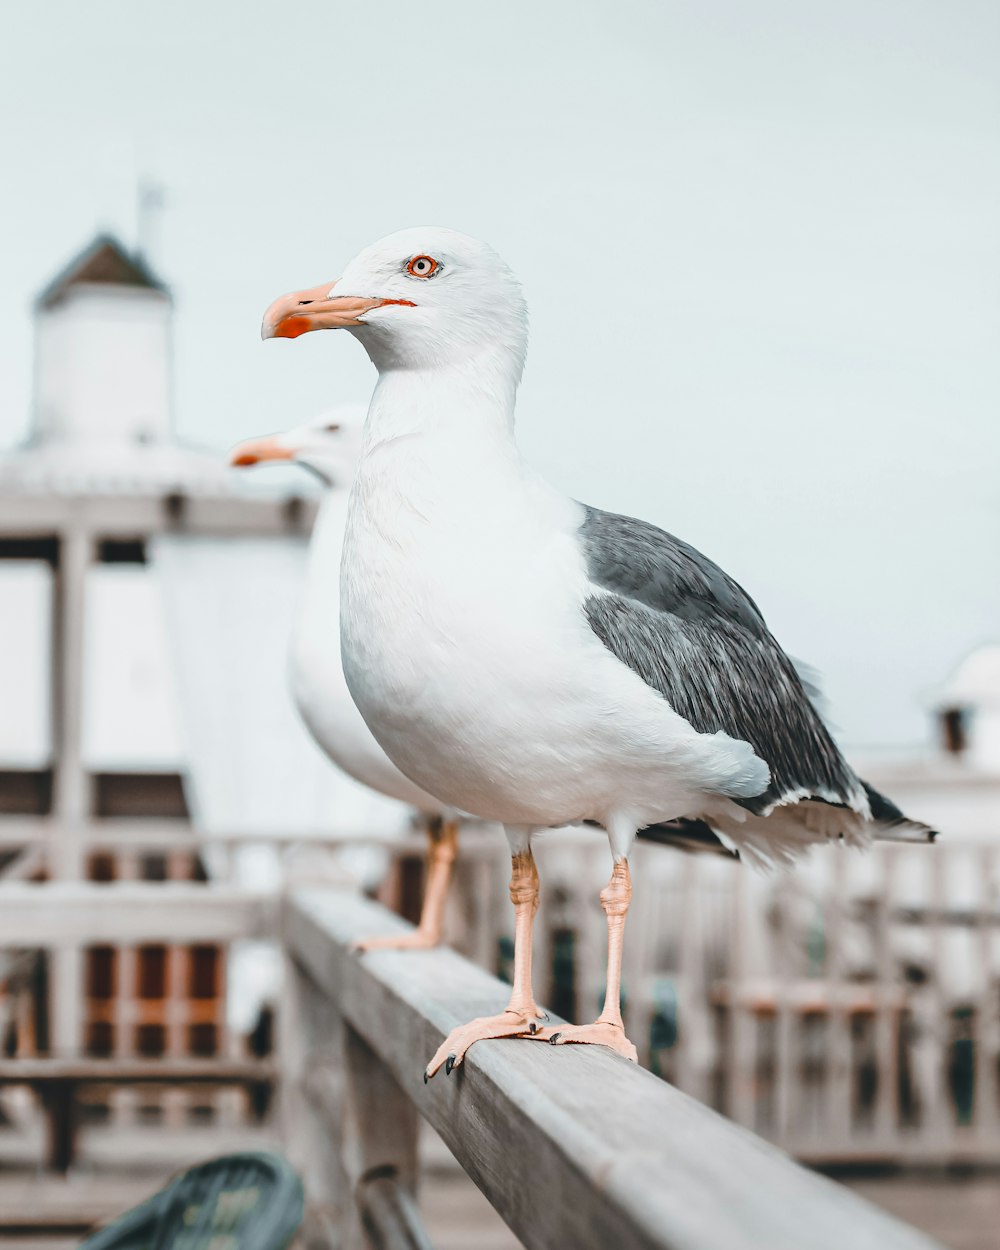 a seagull standing on a wooden rail near a pier